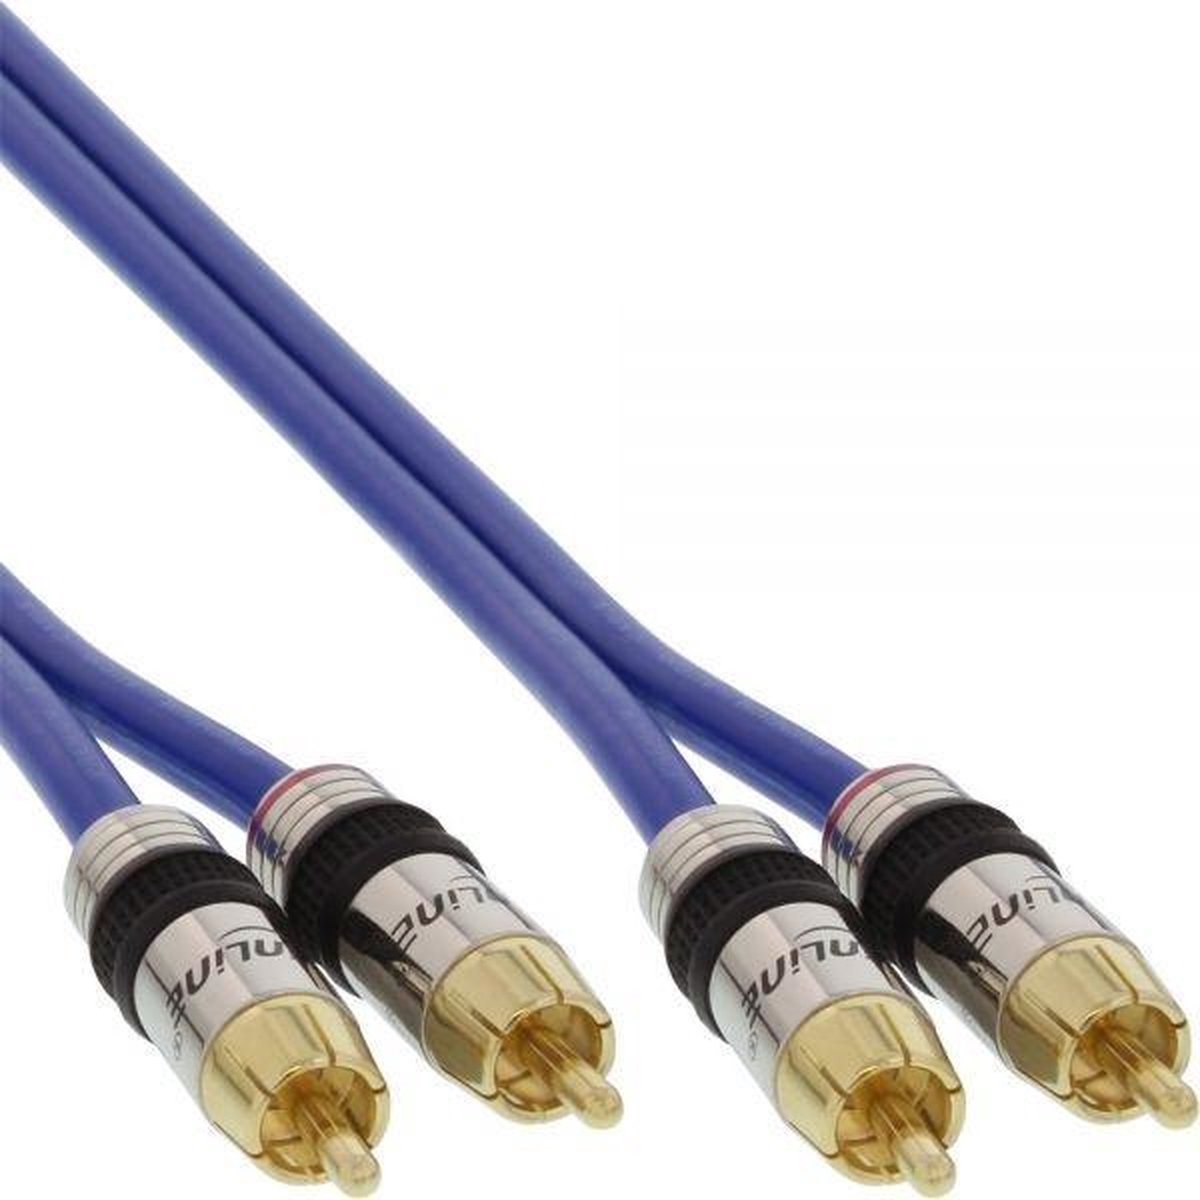 InLine Tulp stereo audio kabel - 25 meter | bol.com